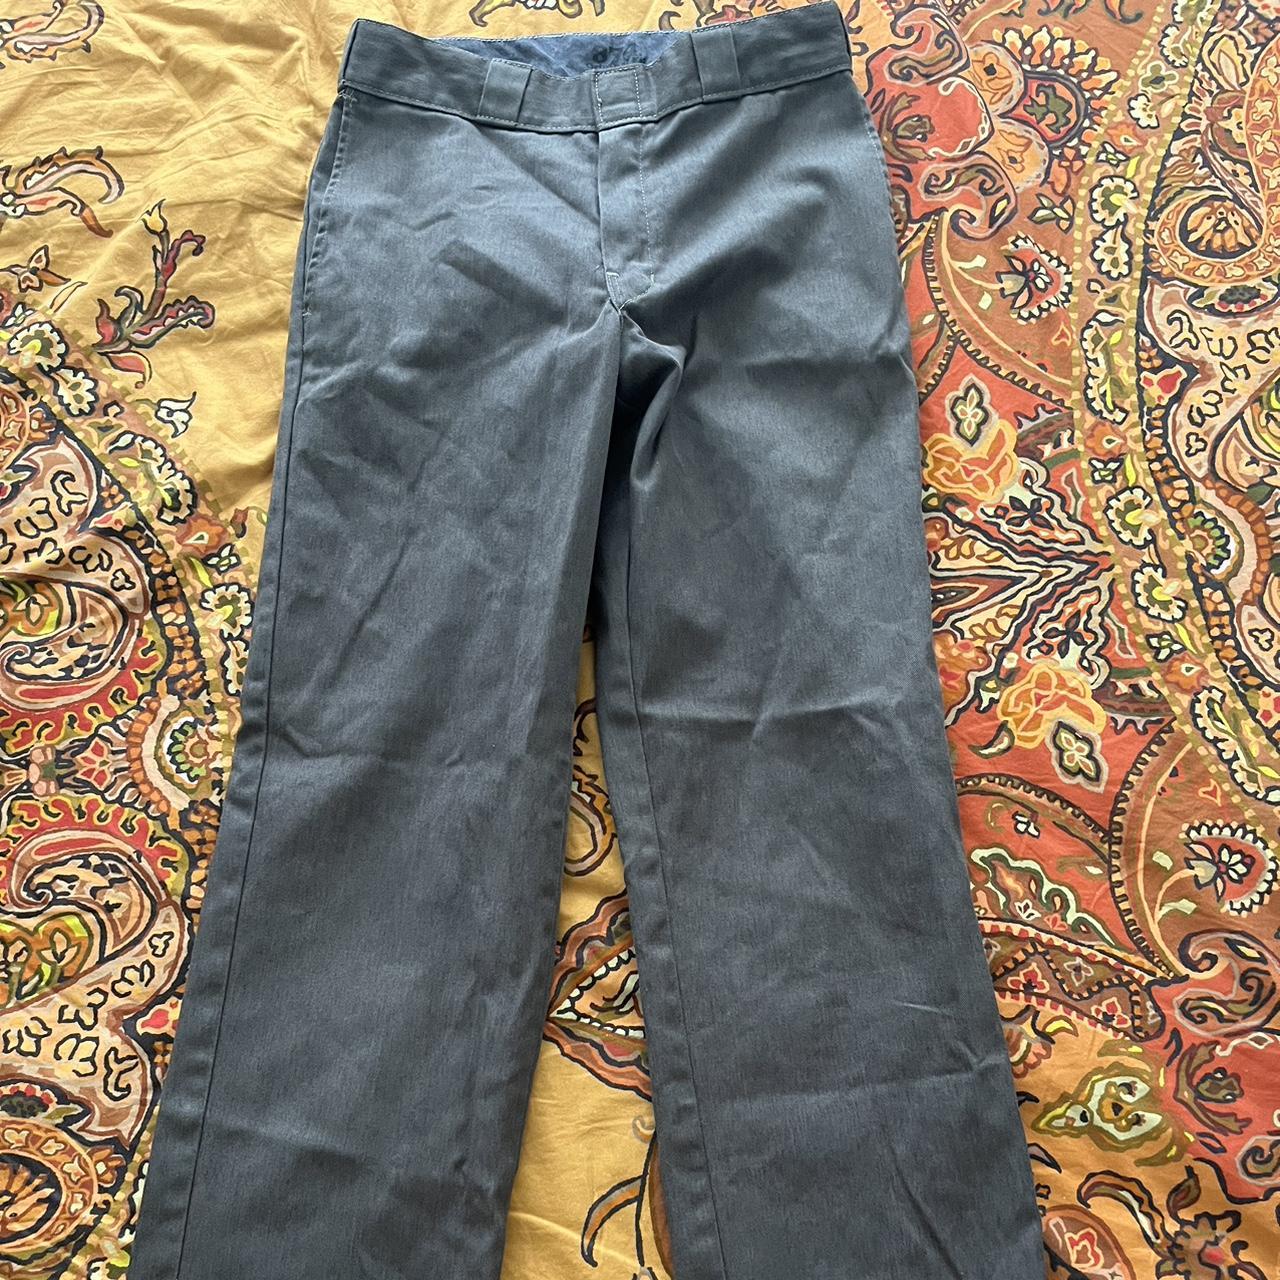 Dickies 874 Original Fit pants/ trousers. Fits